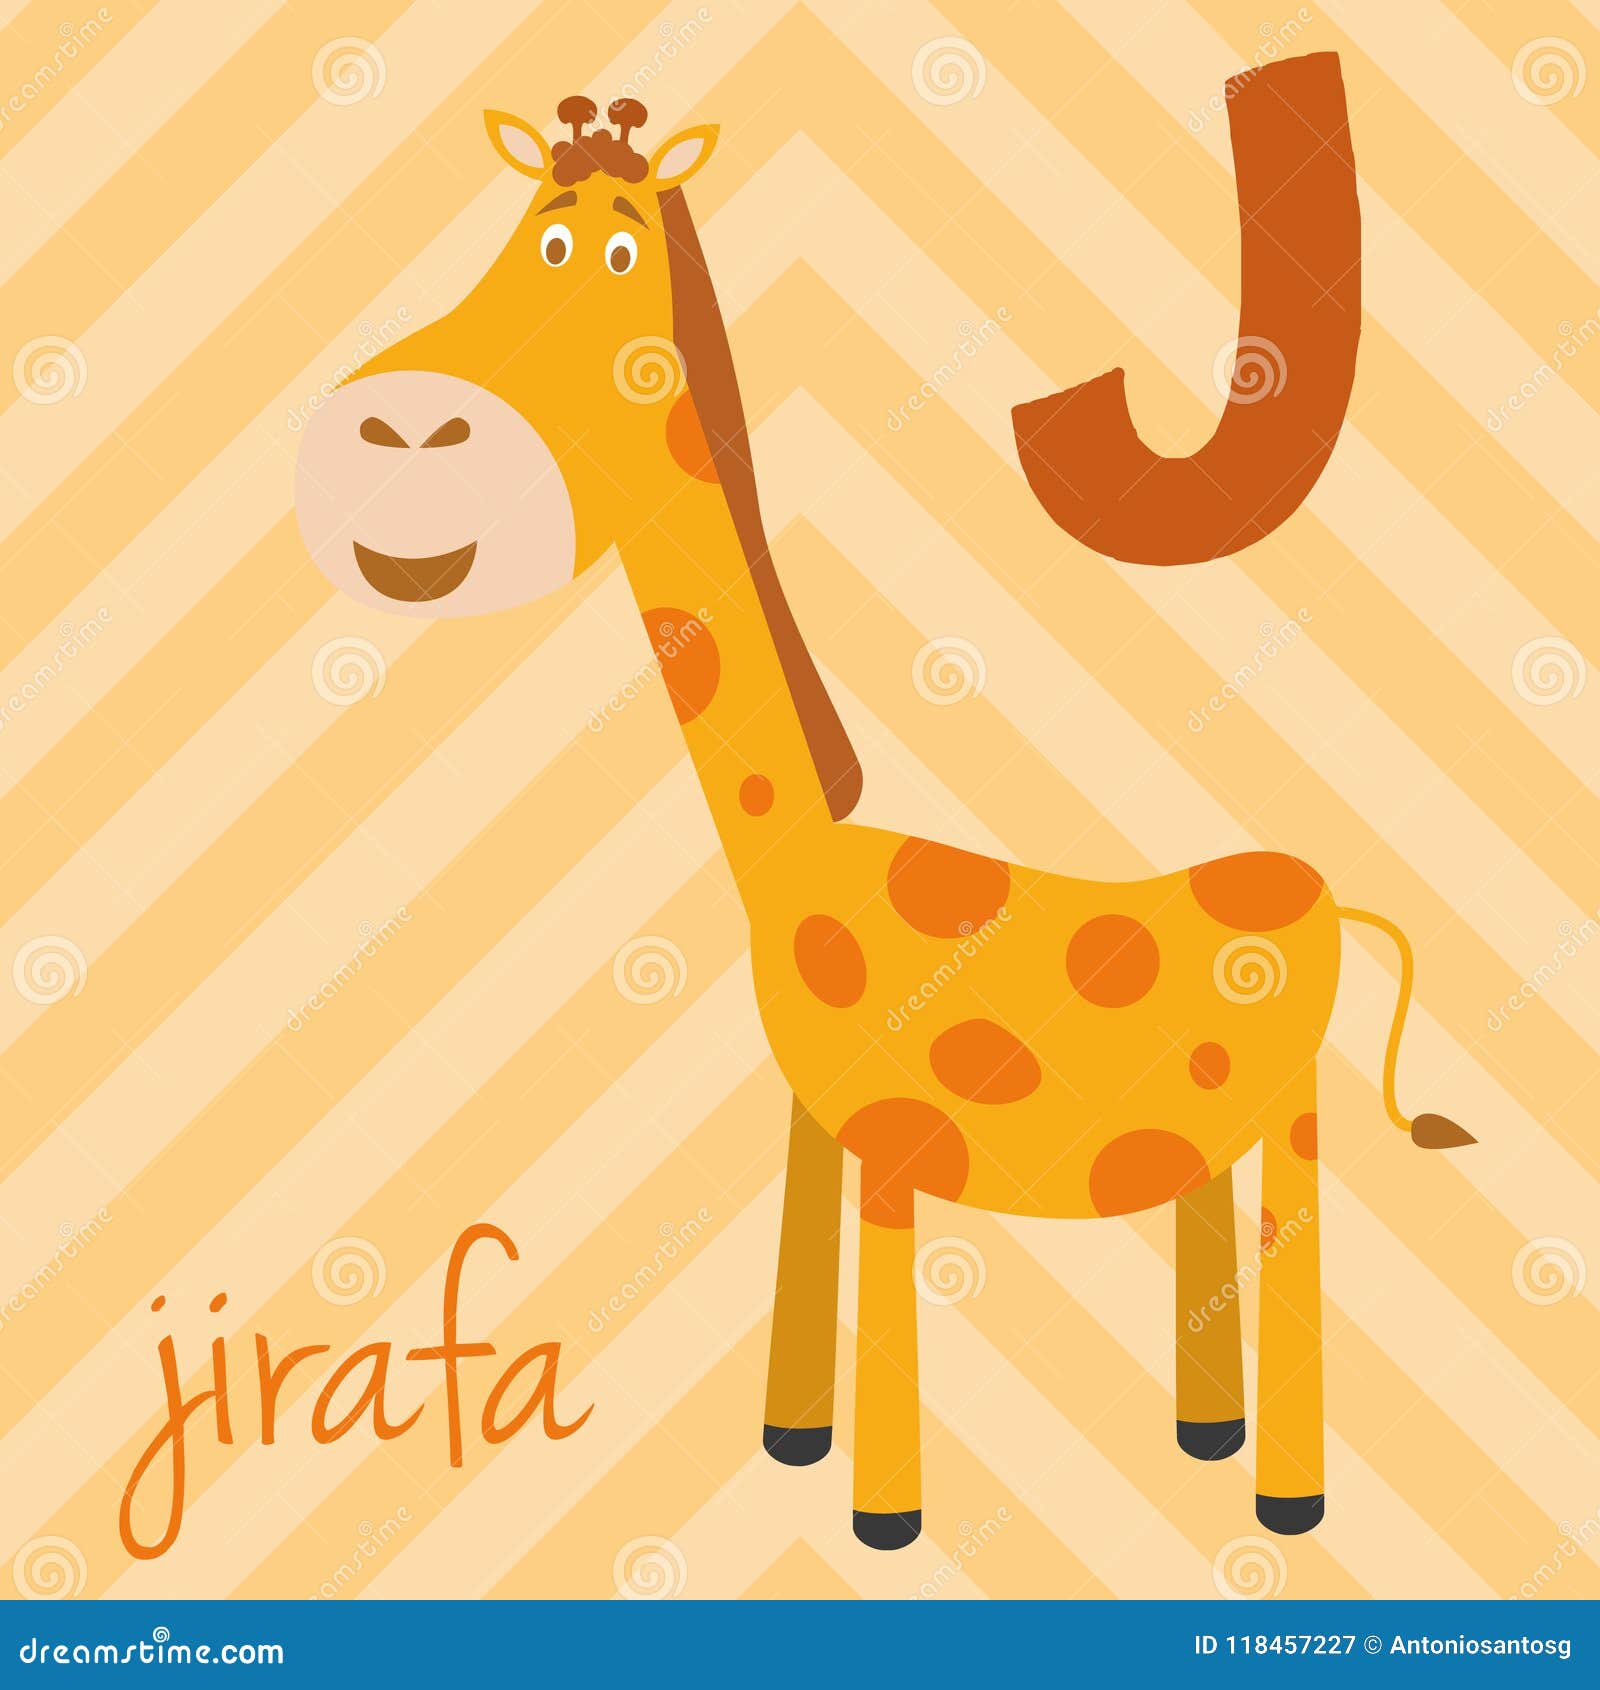 cute cartoon zoo illustrated alphabet with funny animals. spanish alphabet: j for jirafa.